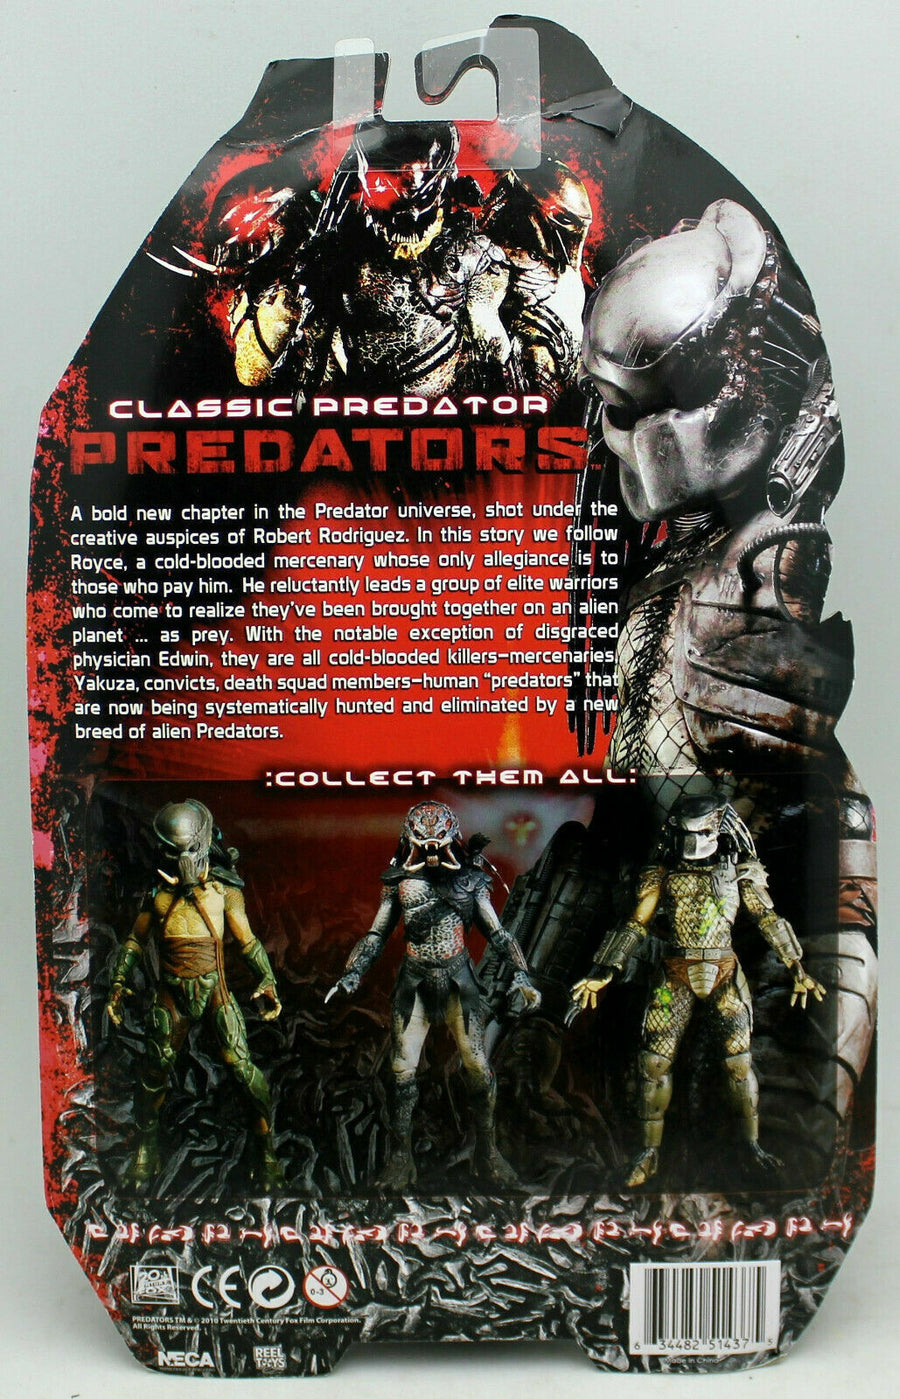 NECA Classic Predator PREDATORS Series 2 Battle Damaged Classic 7" Action Figure